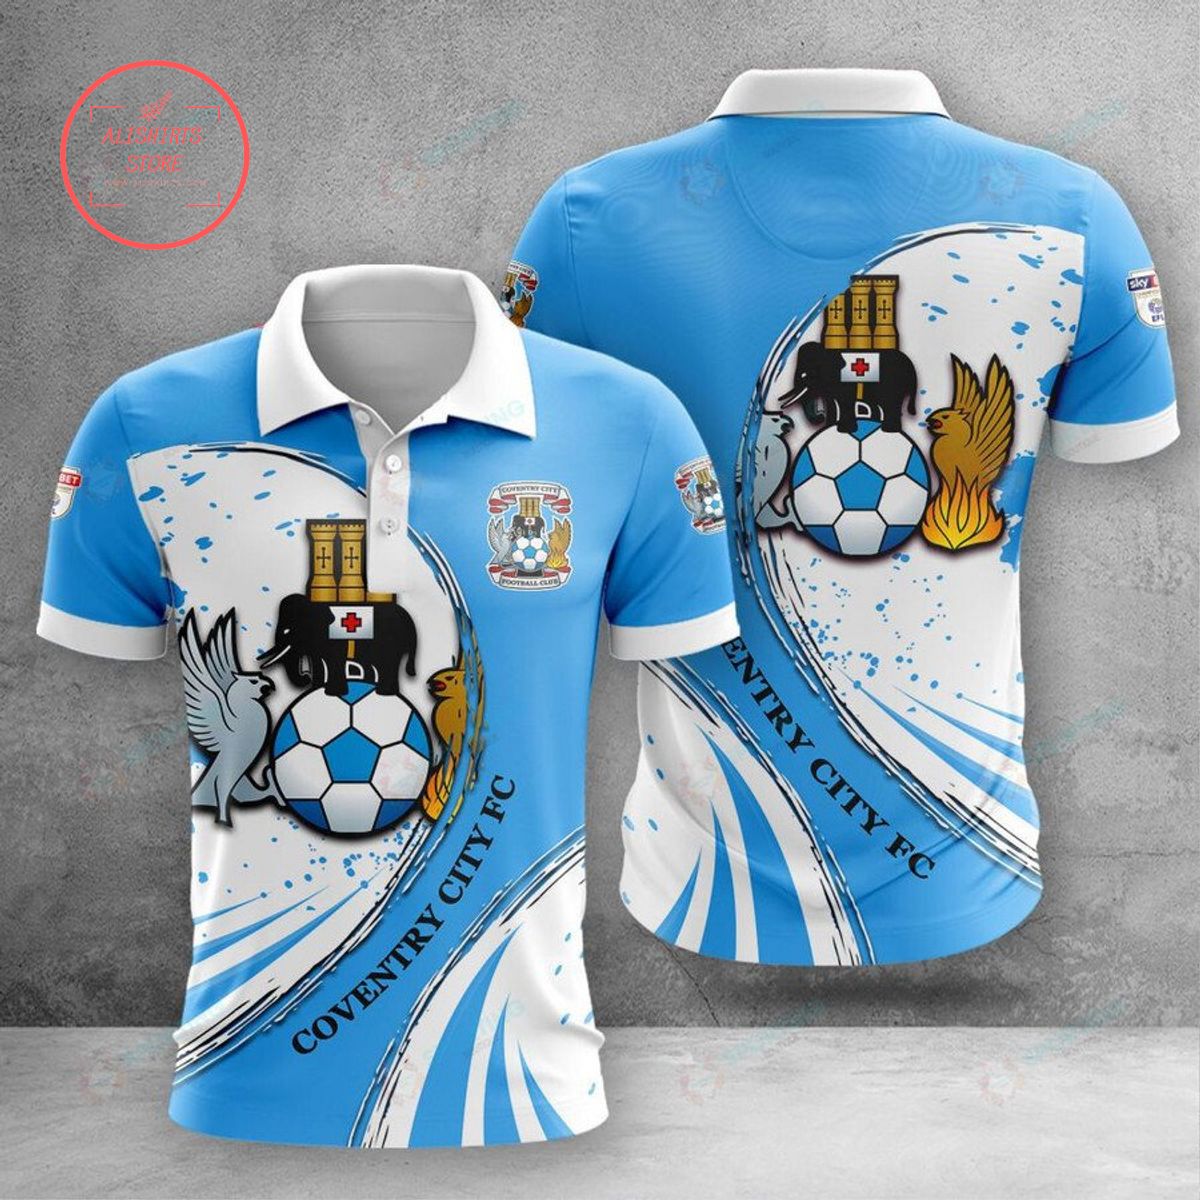 EFL Coventry City FC Polo Shirt